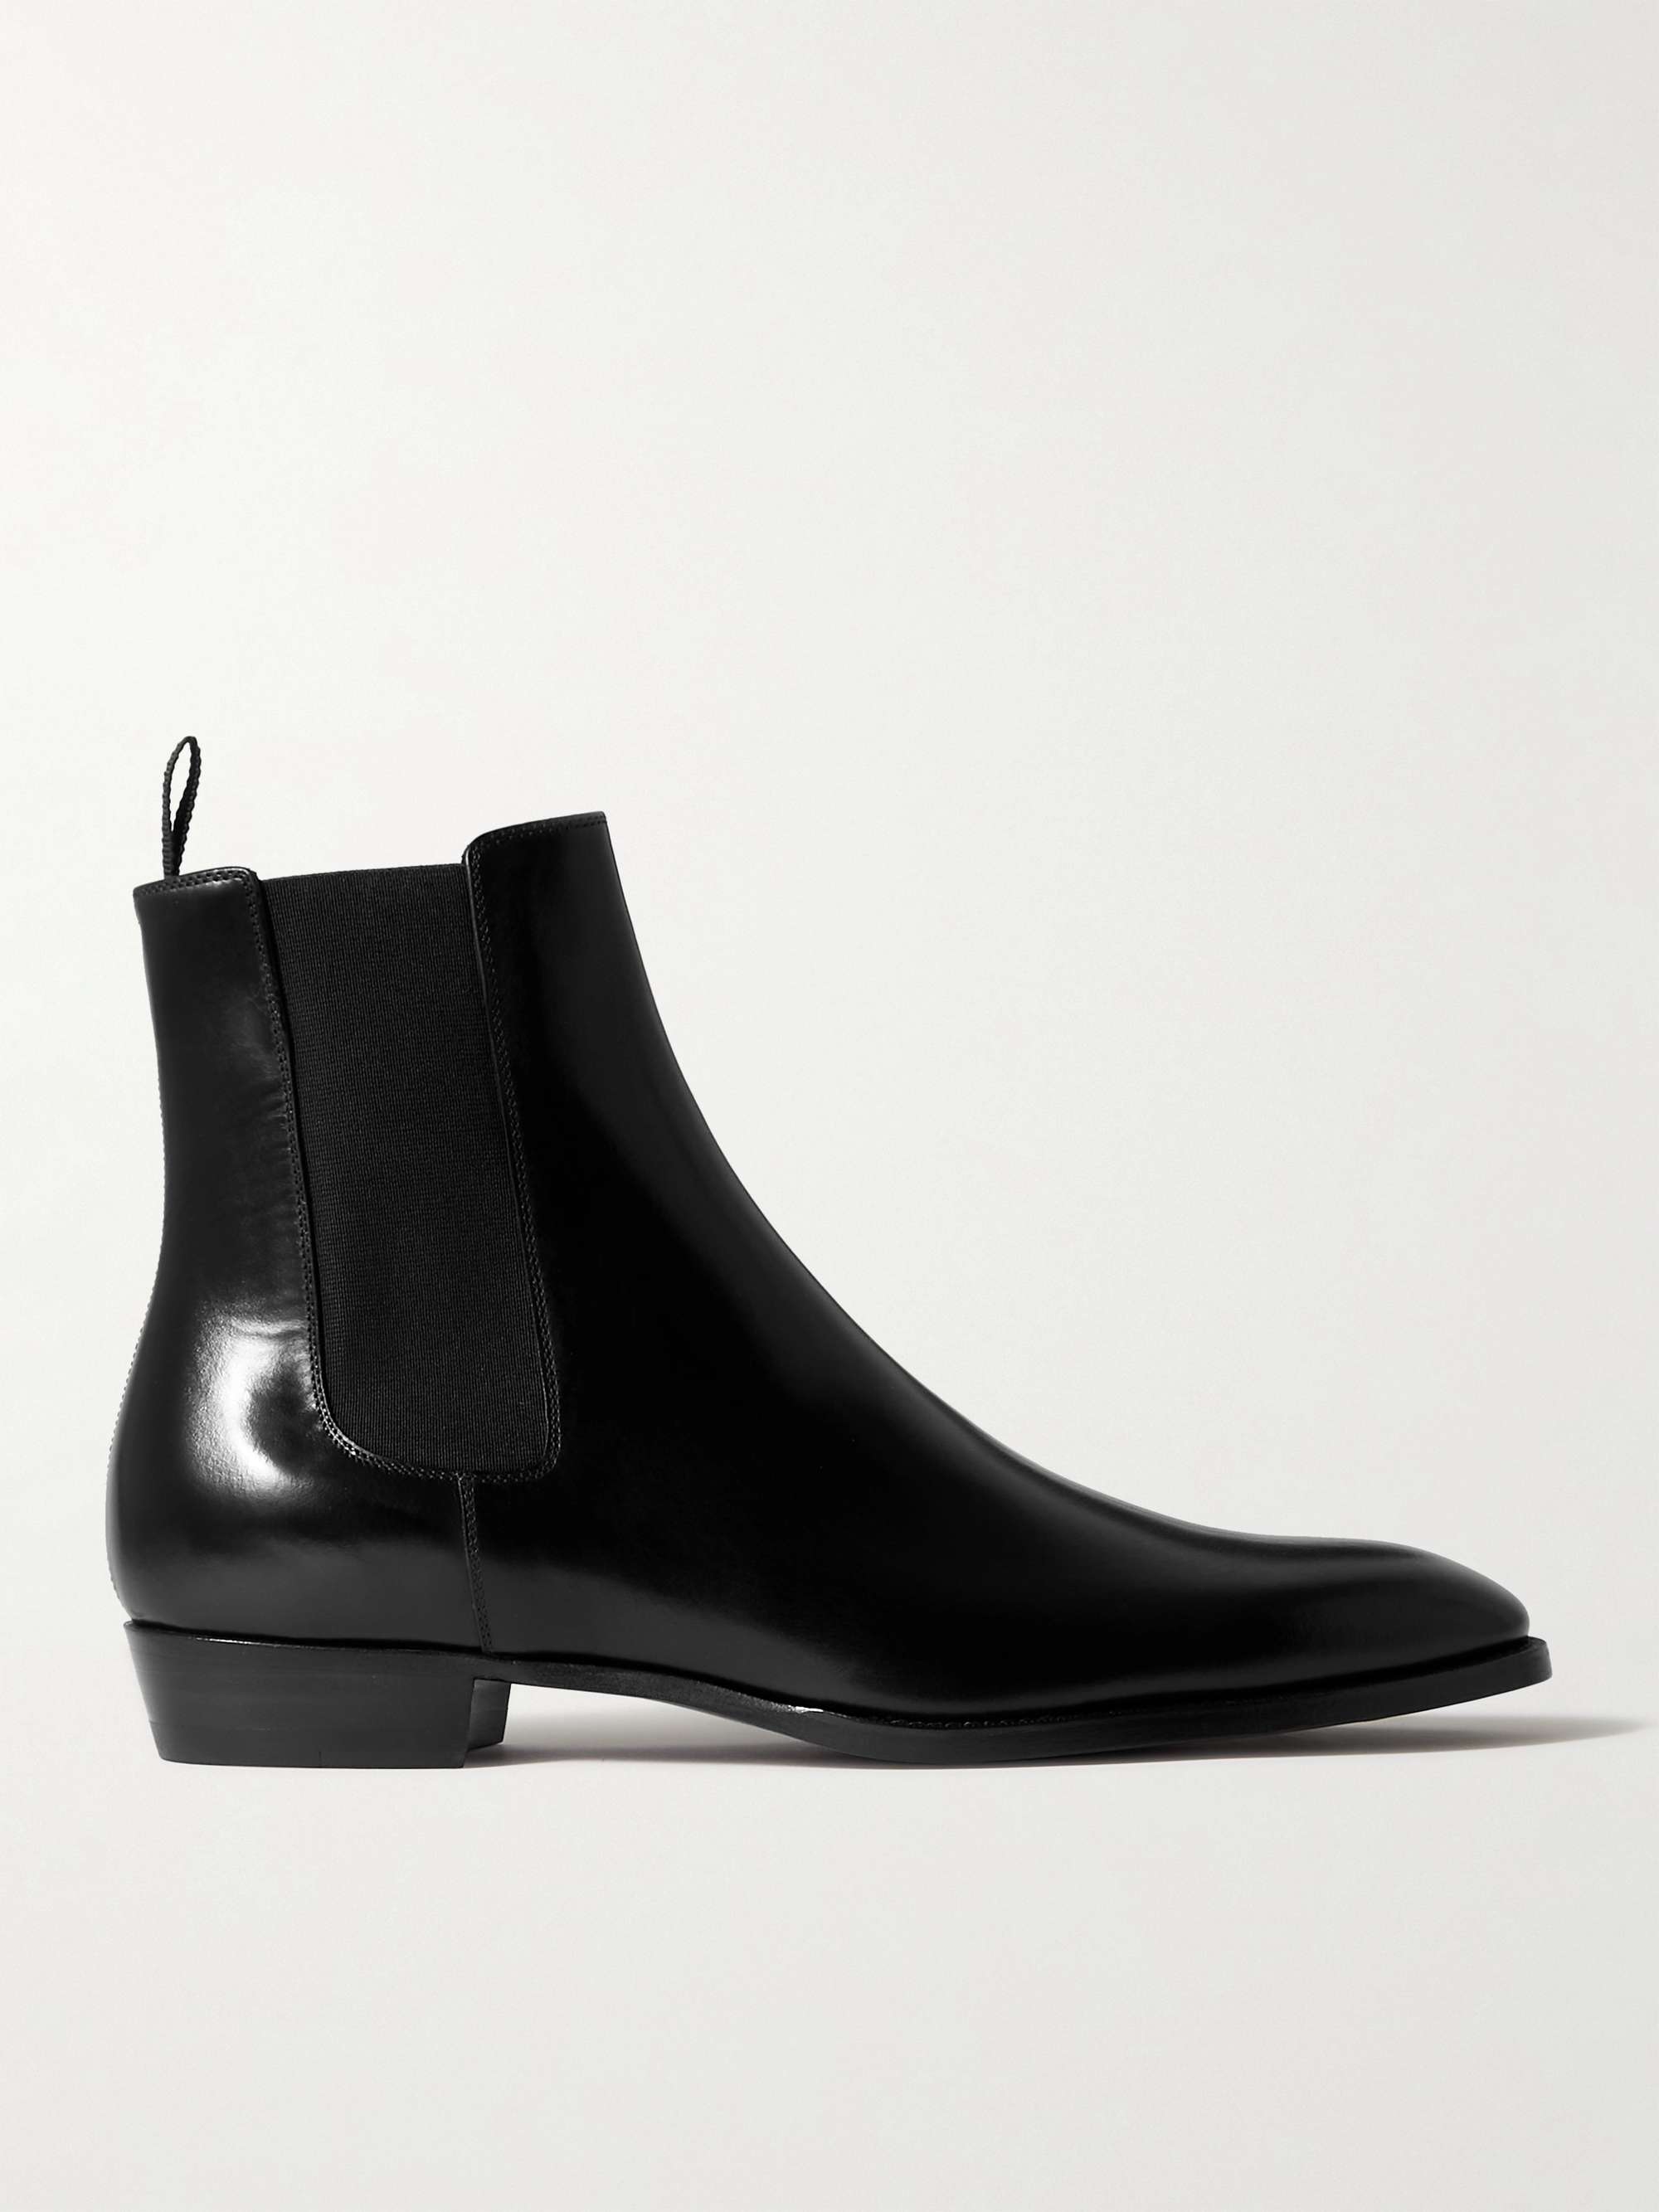 Black Leather Chelsea Boots | CELINE HOMME | MR PORTER